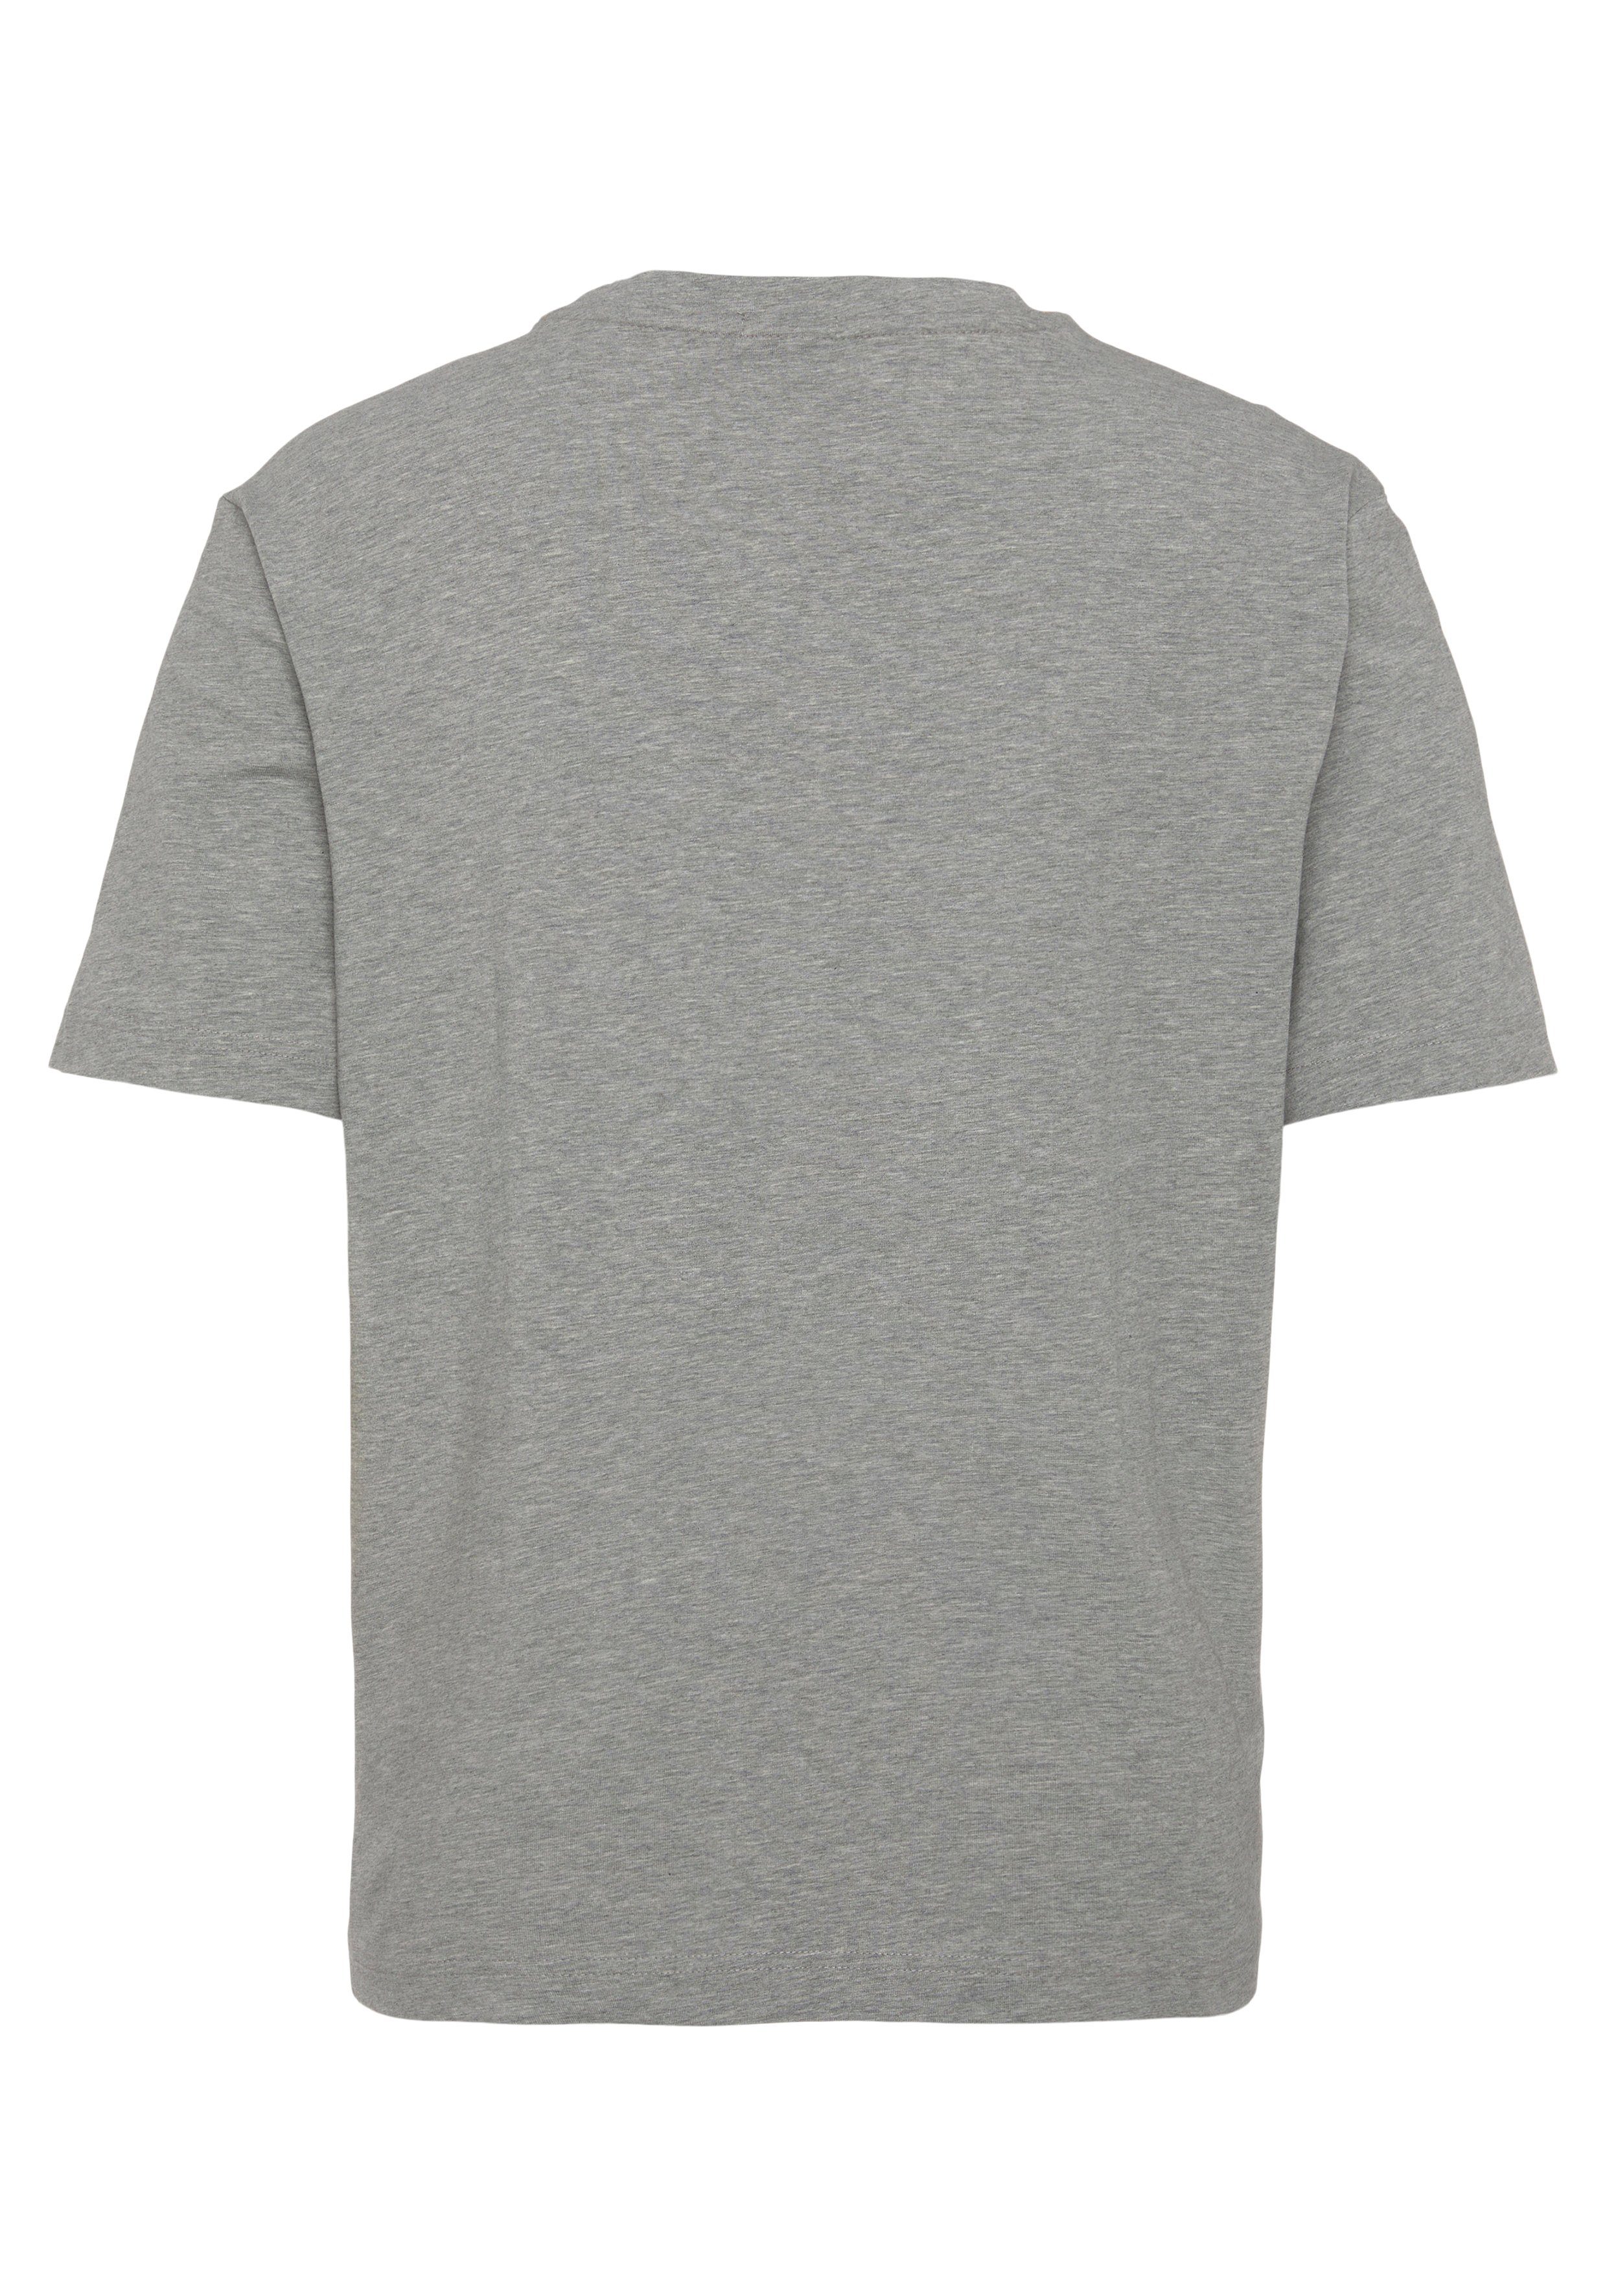 ORANGE T-Shirt Grey Rundhalsausschnitt Light/Pastel BOSS TChup mit 051